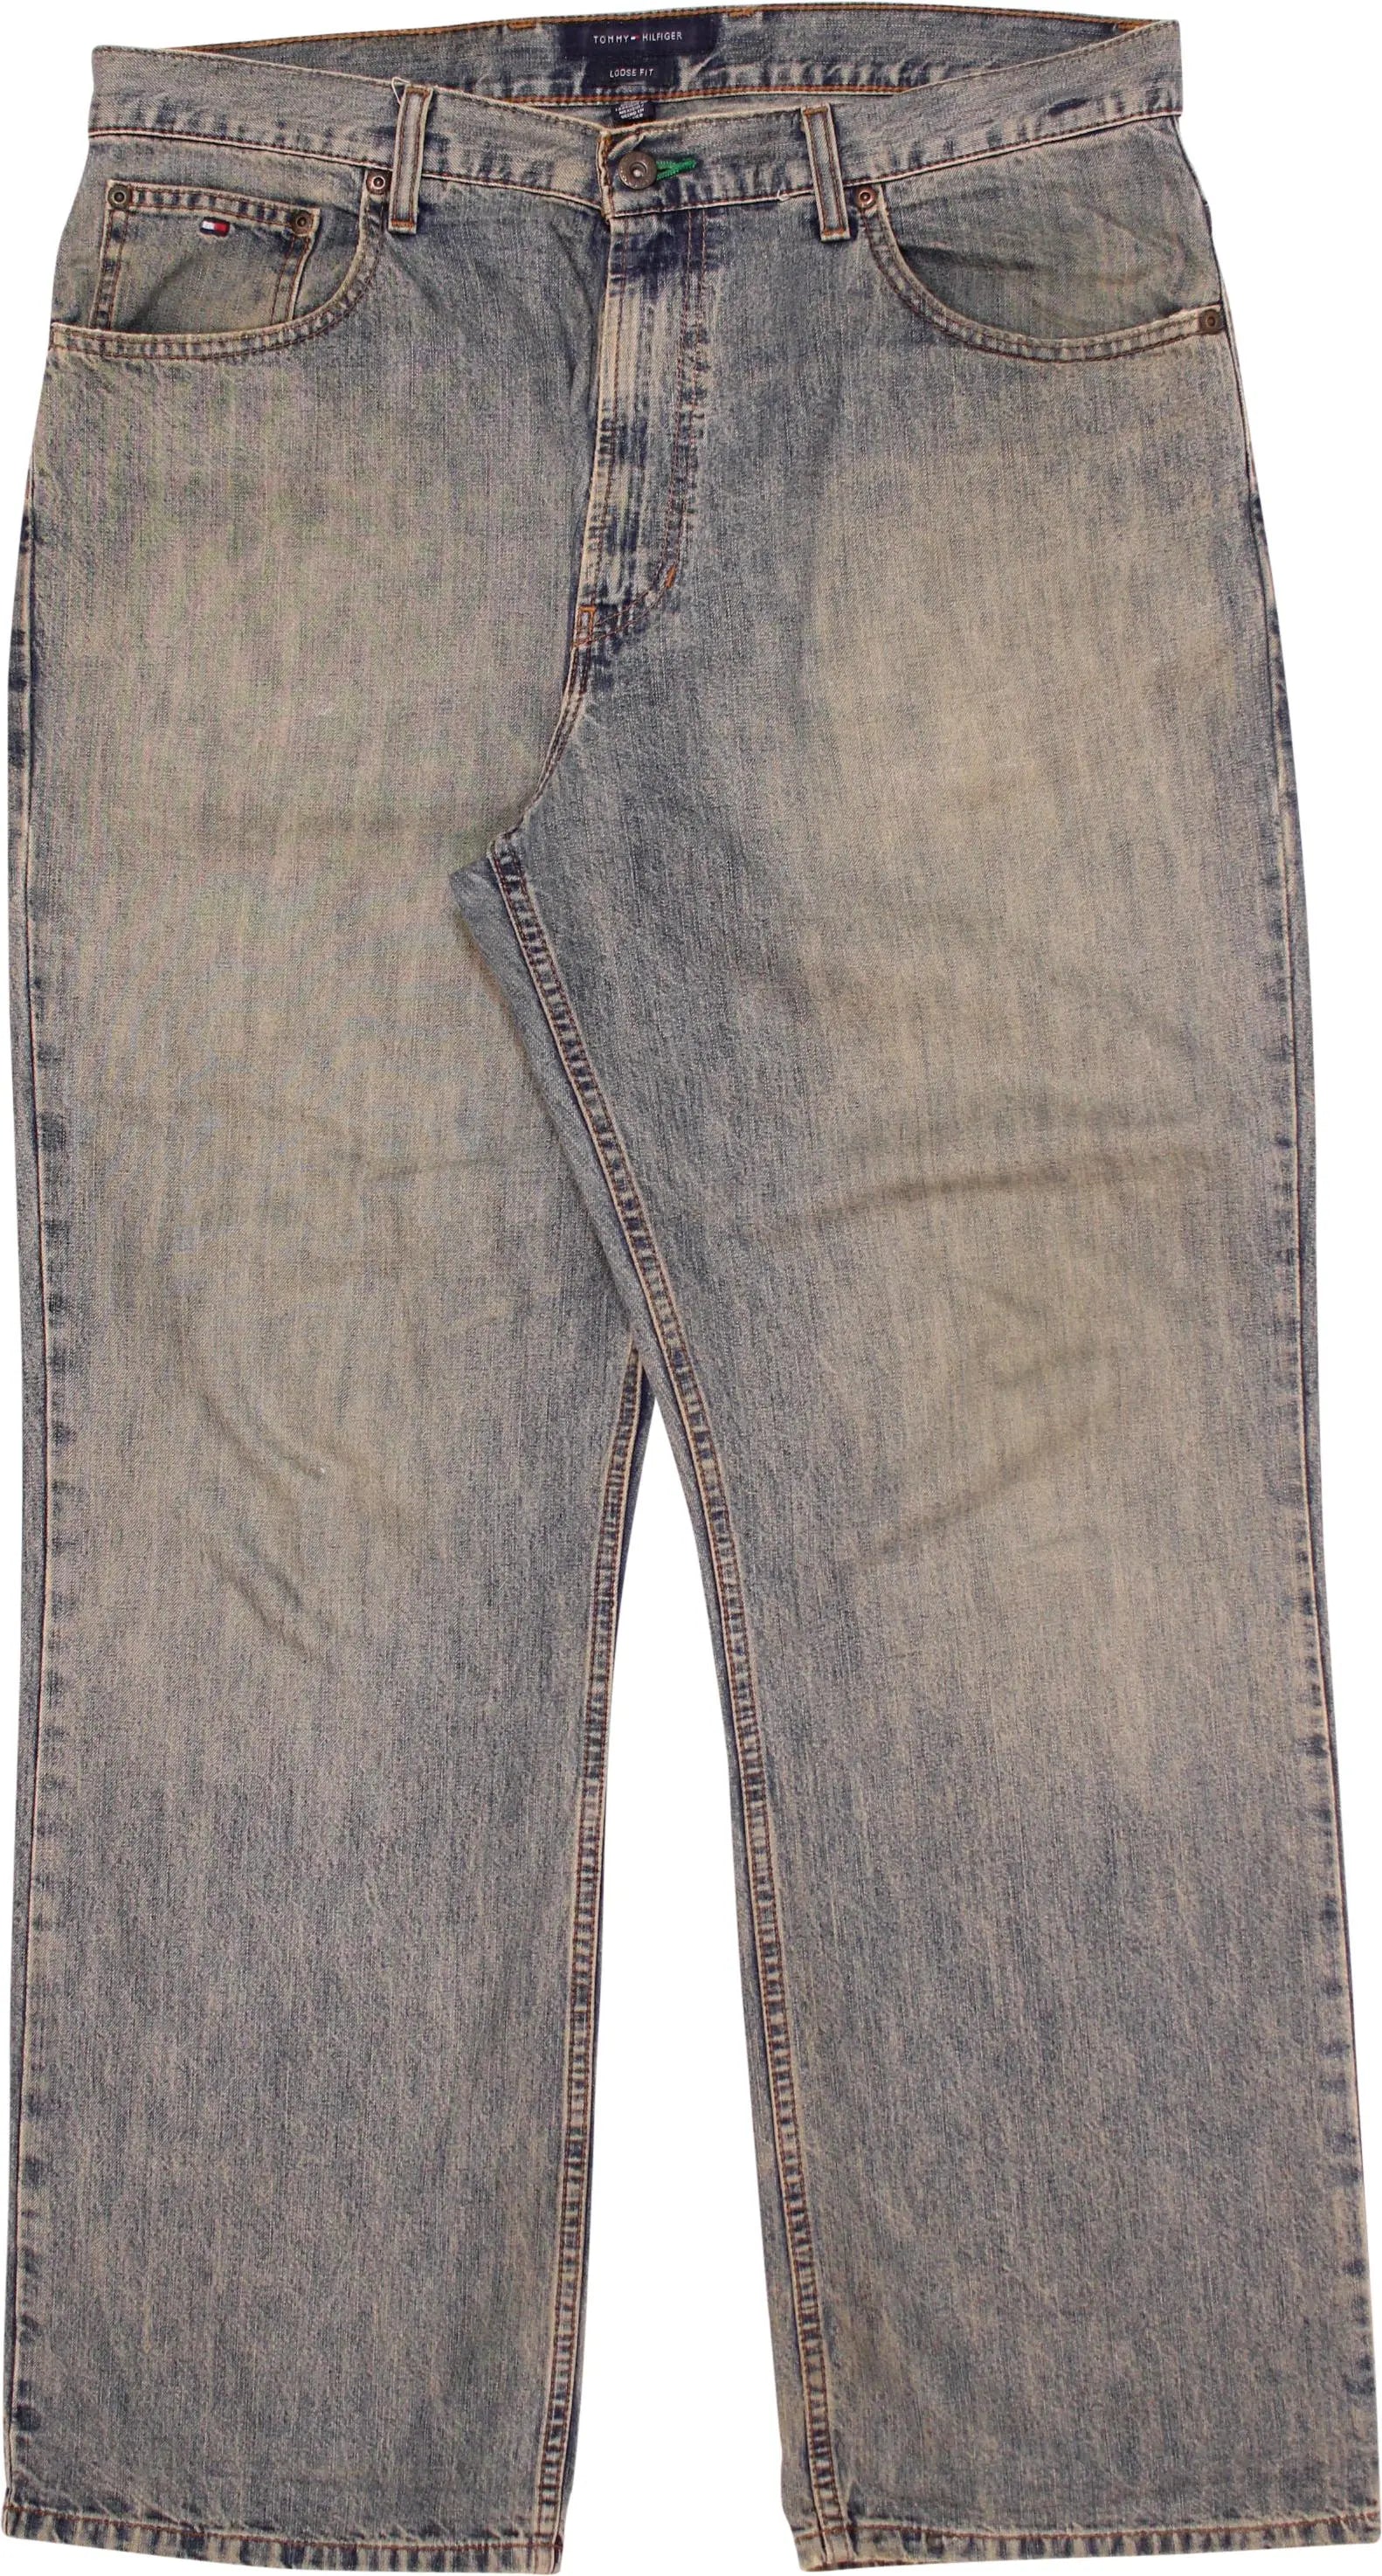 Tommy Hilfiger - Tommy Hilfiger Loose Fit Jeans- ThriftTale.com - Vintage and second handclothing